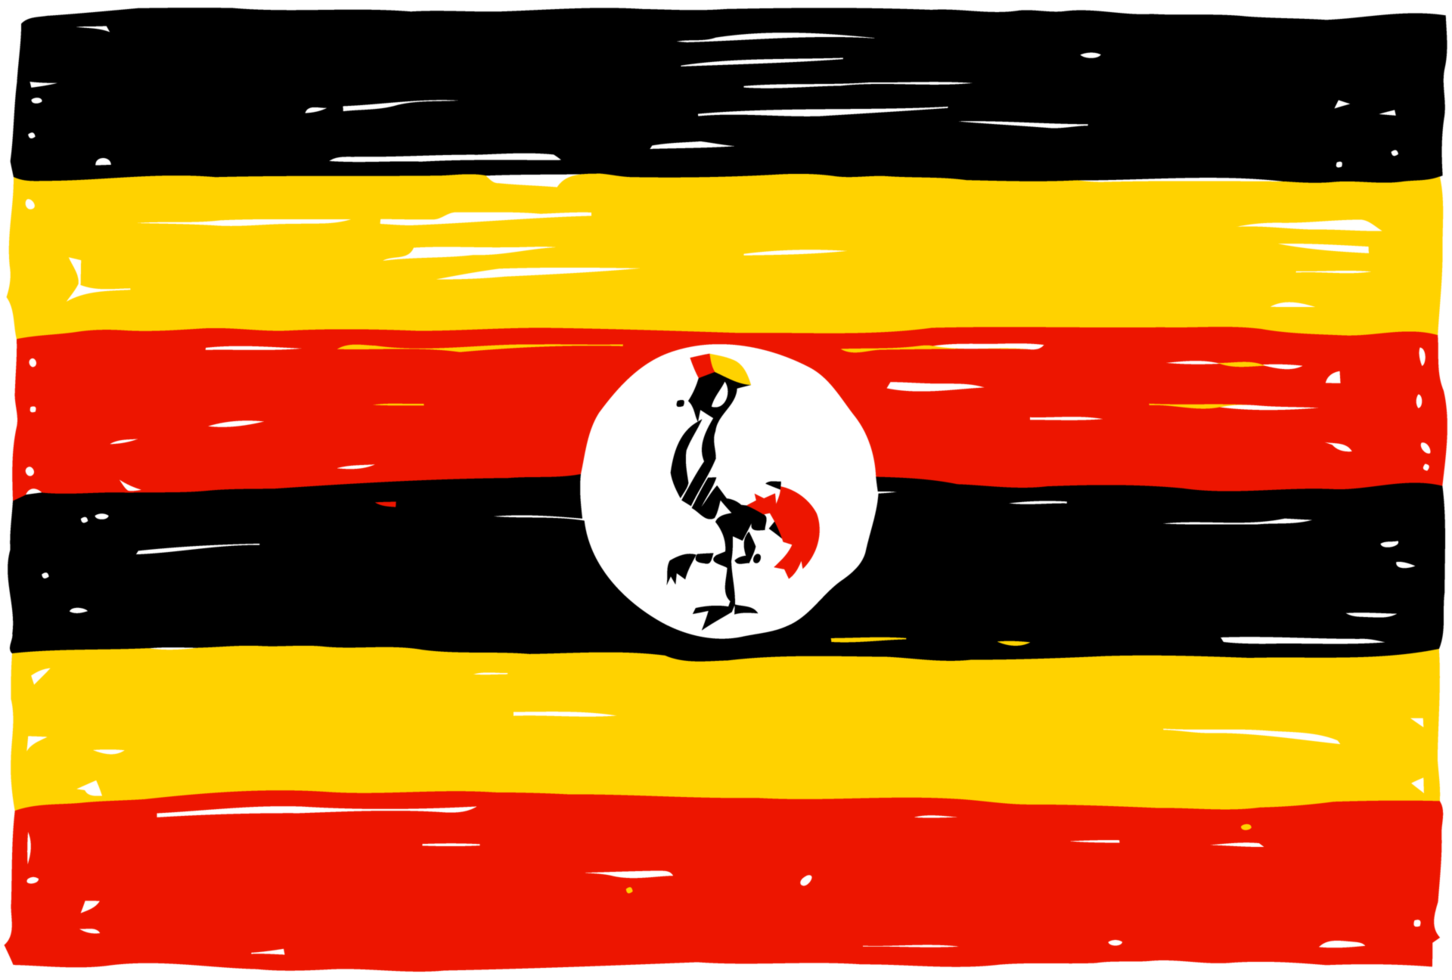 Uganda National Country Flag Pencil Color Sketch Illustration with Transparent Background png